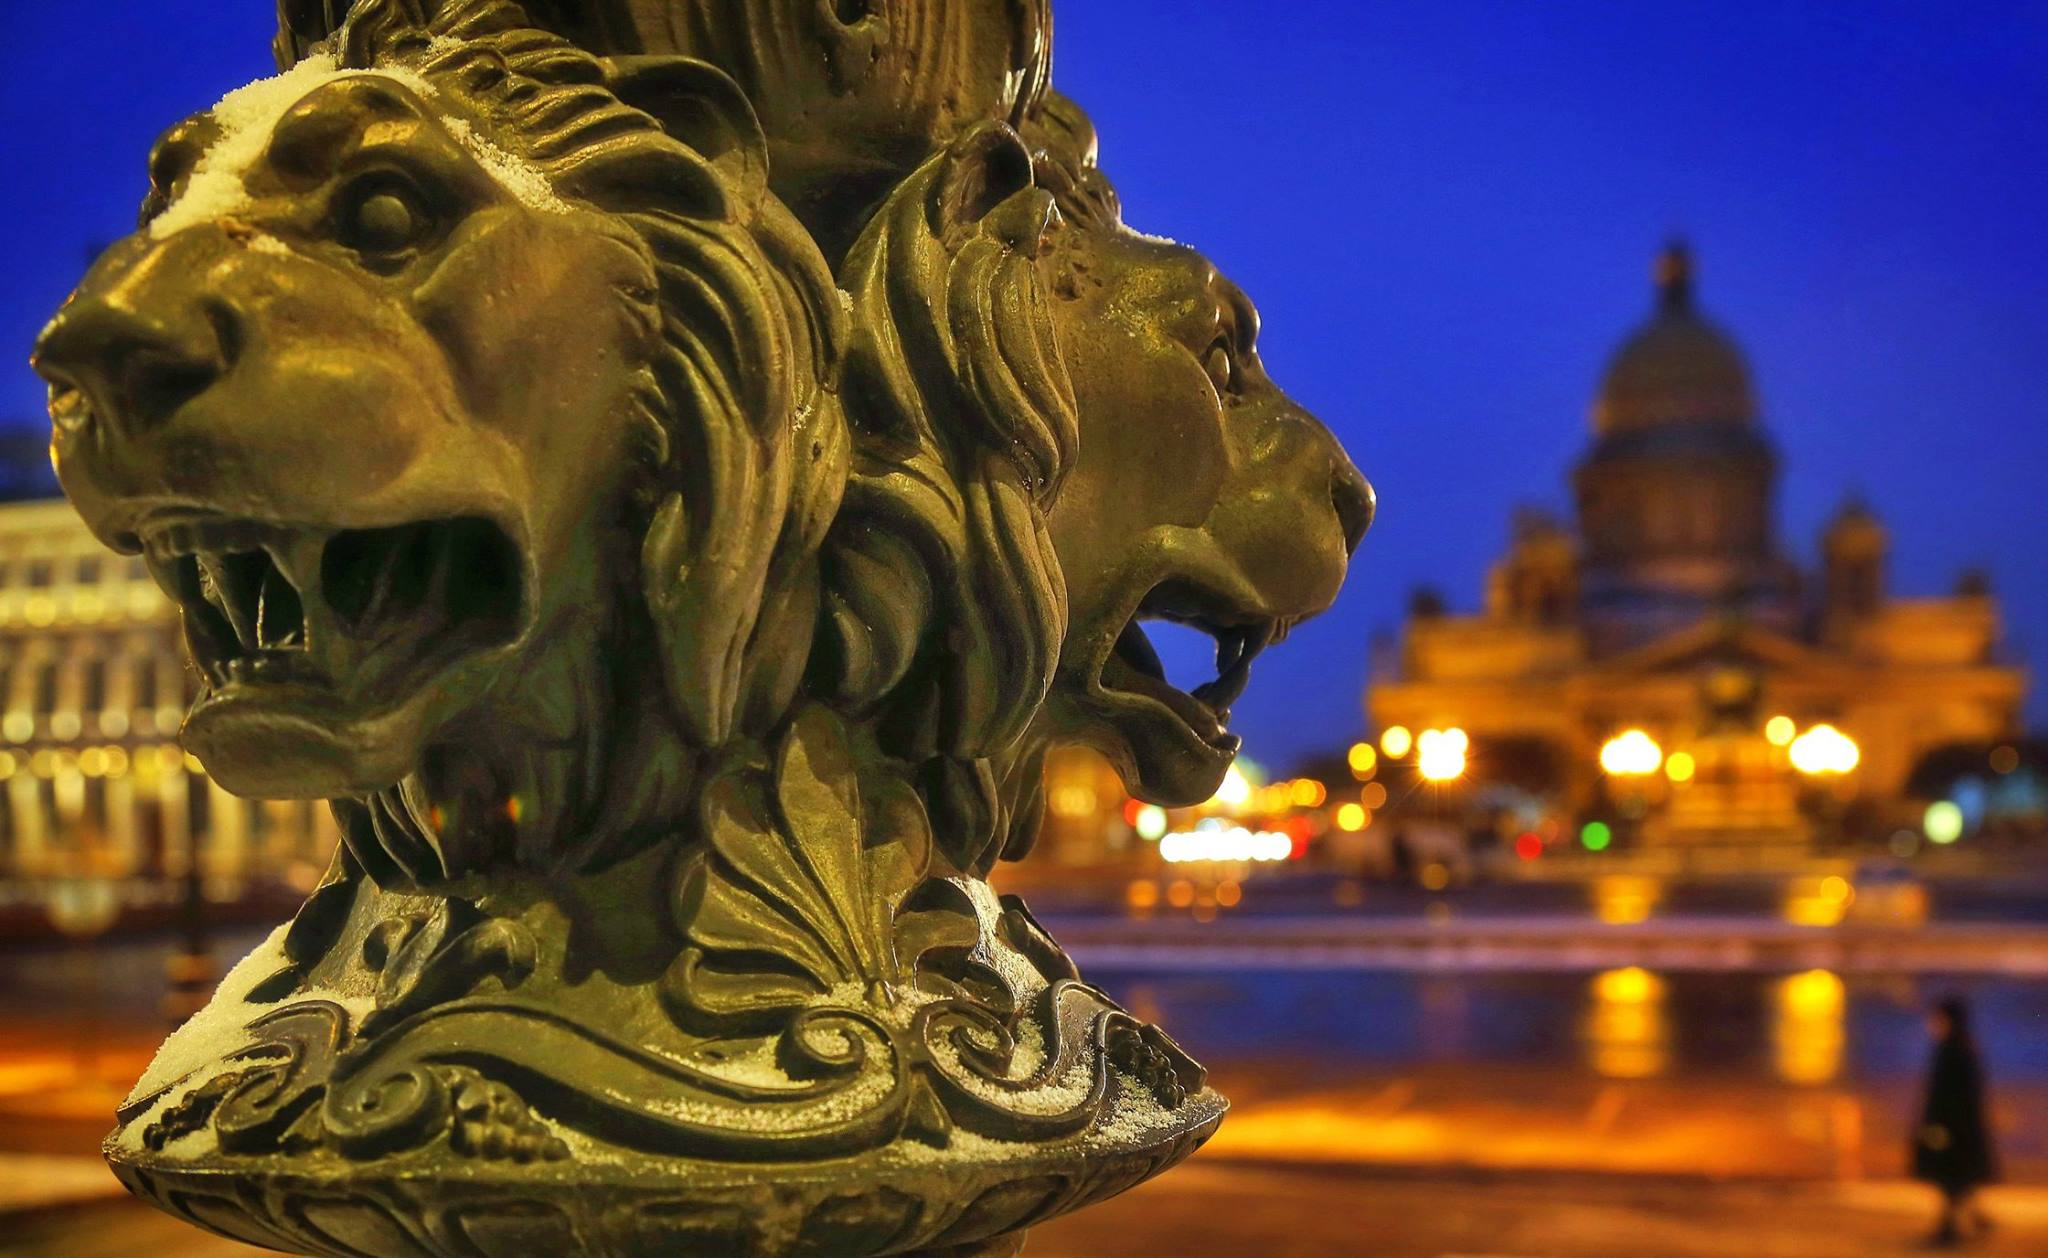 St. Petersburg lions